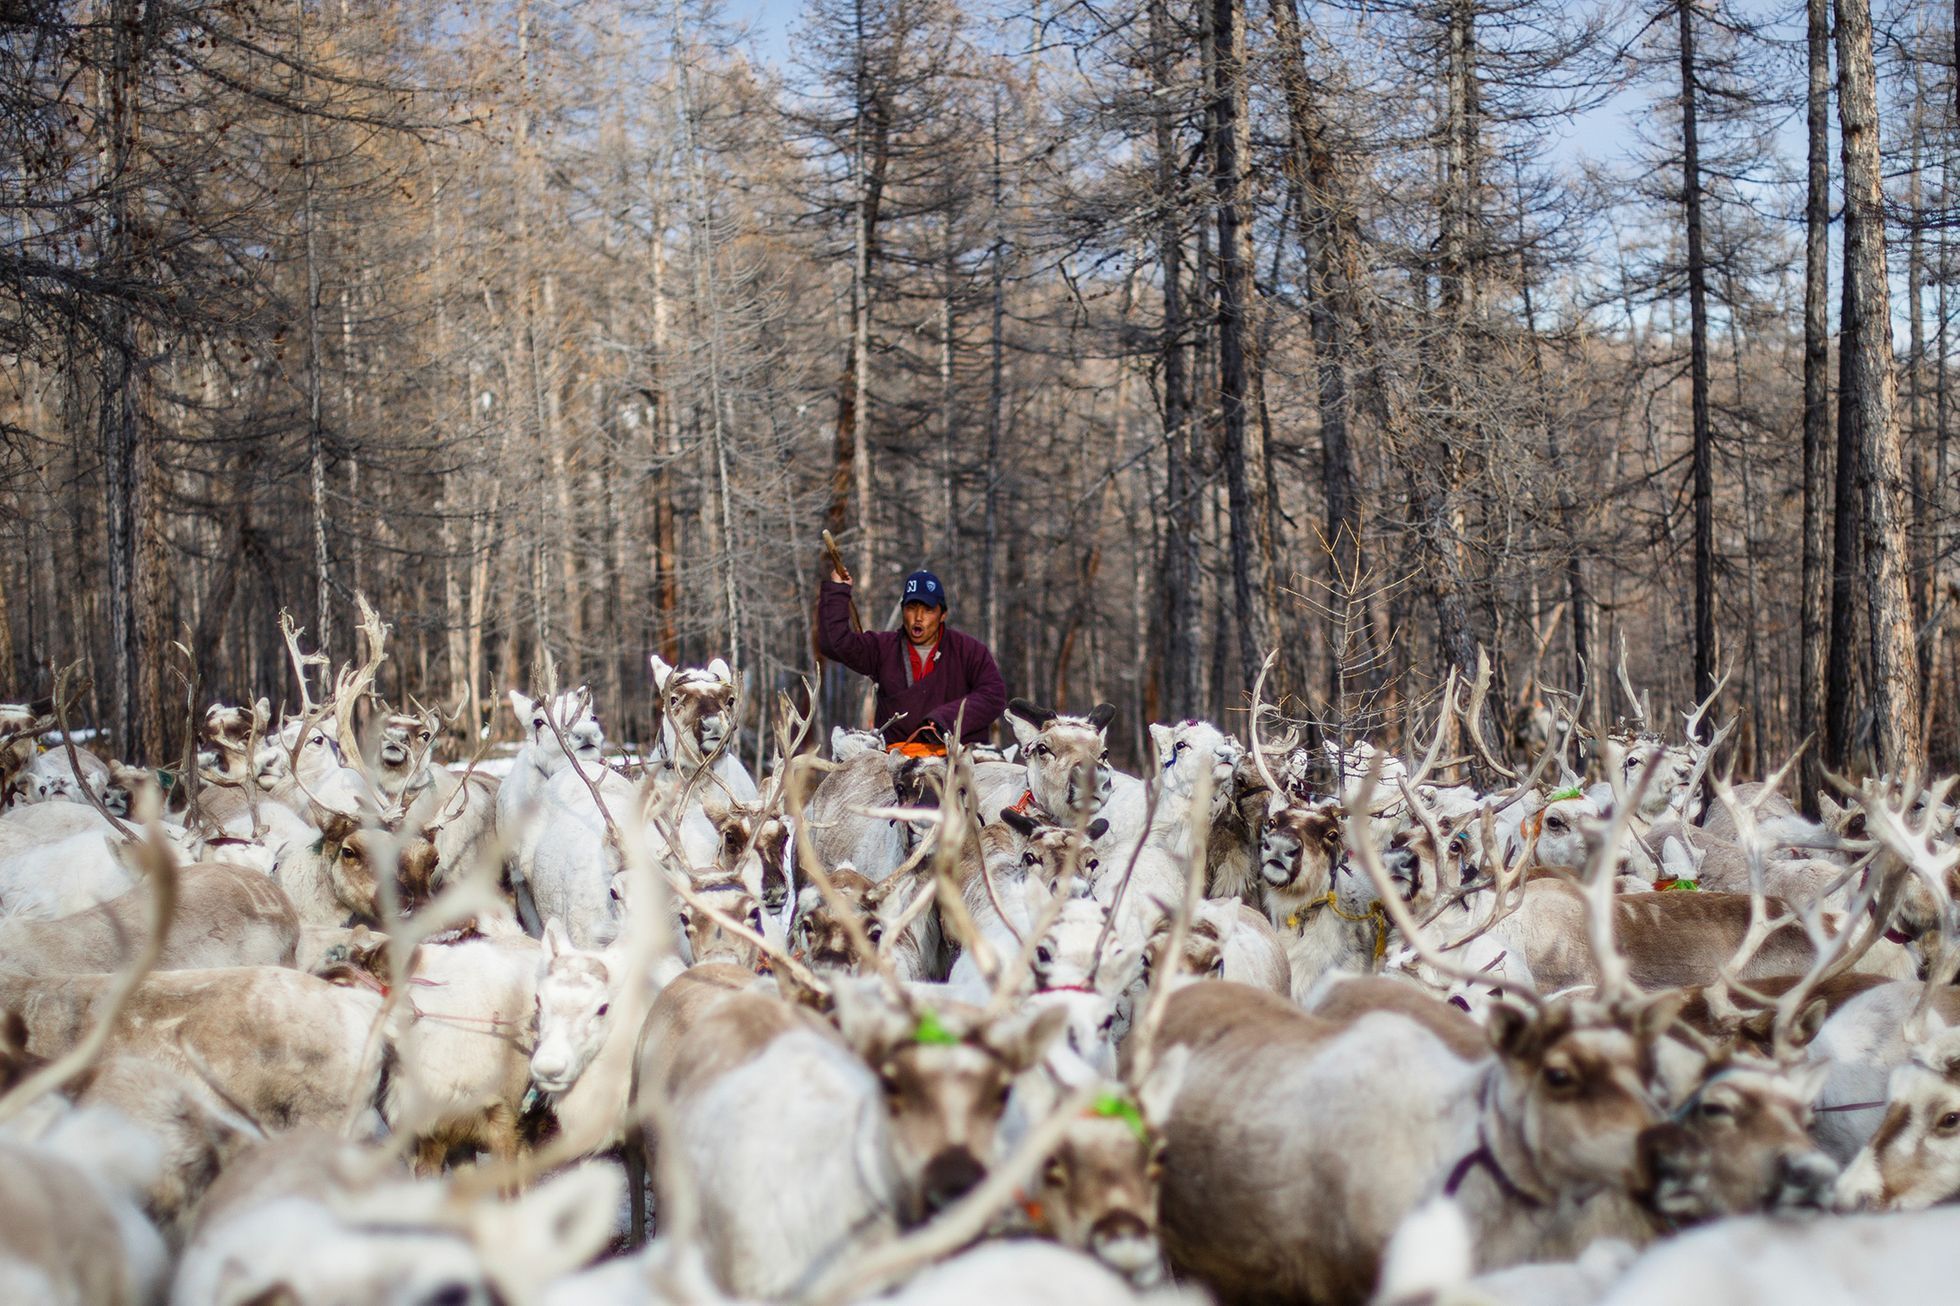 FOTOGALERIE / Život kočovných pastýřů v Mongolsku / Reuters / rok 2018 / 6